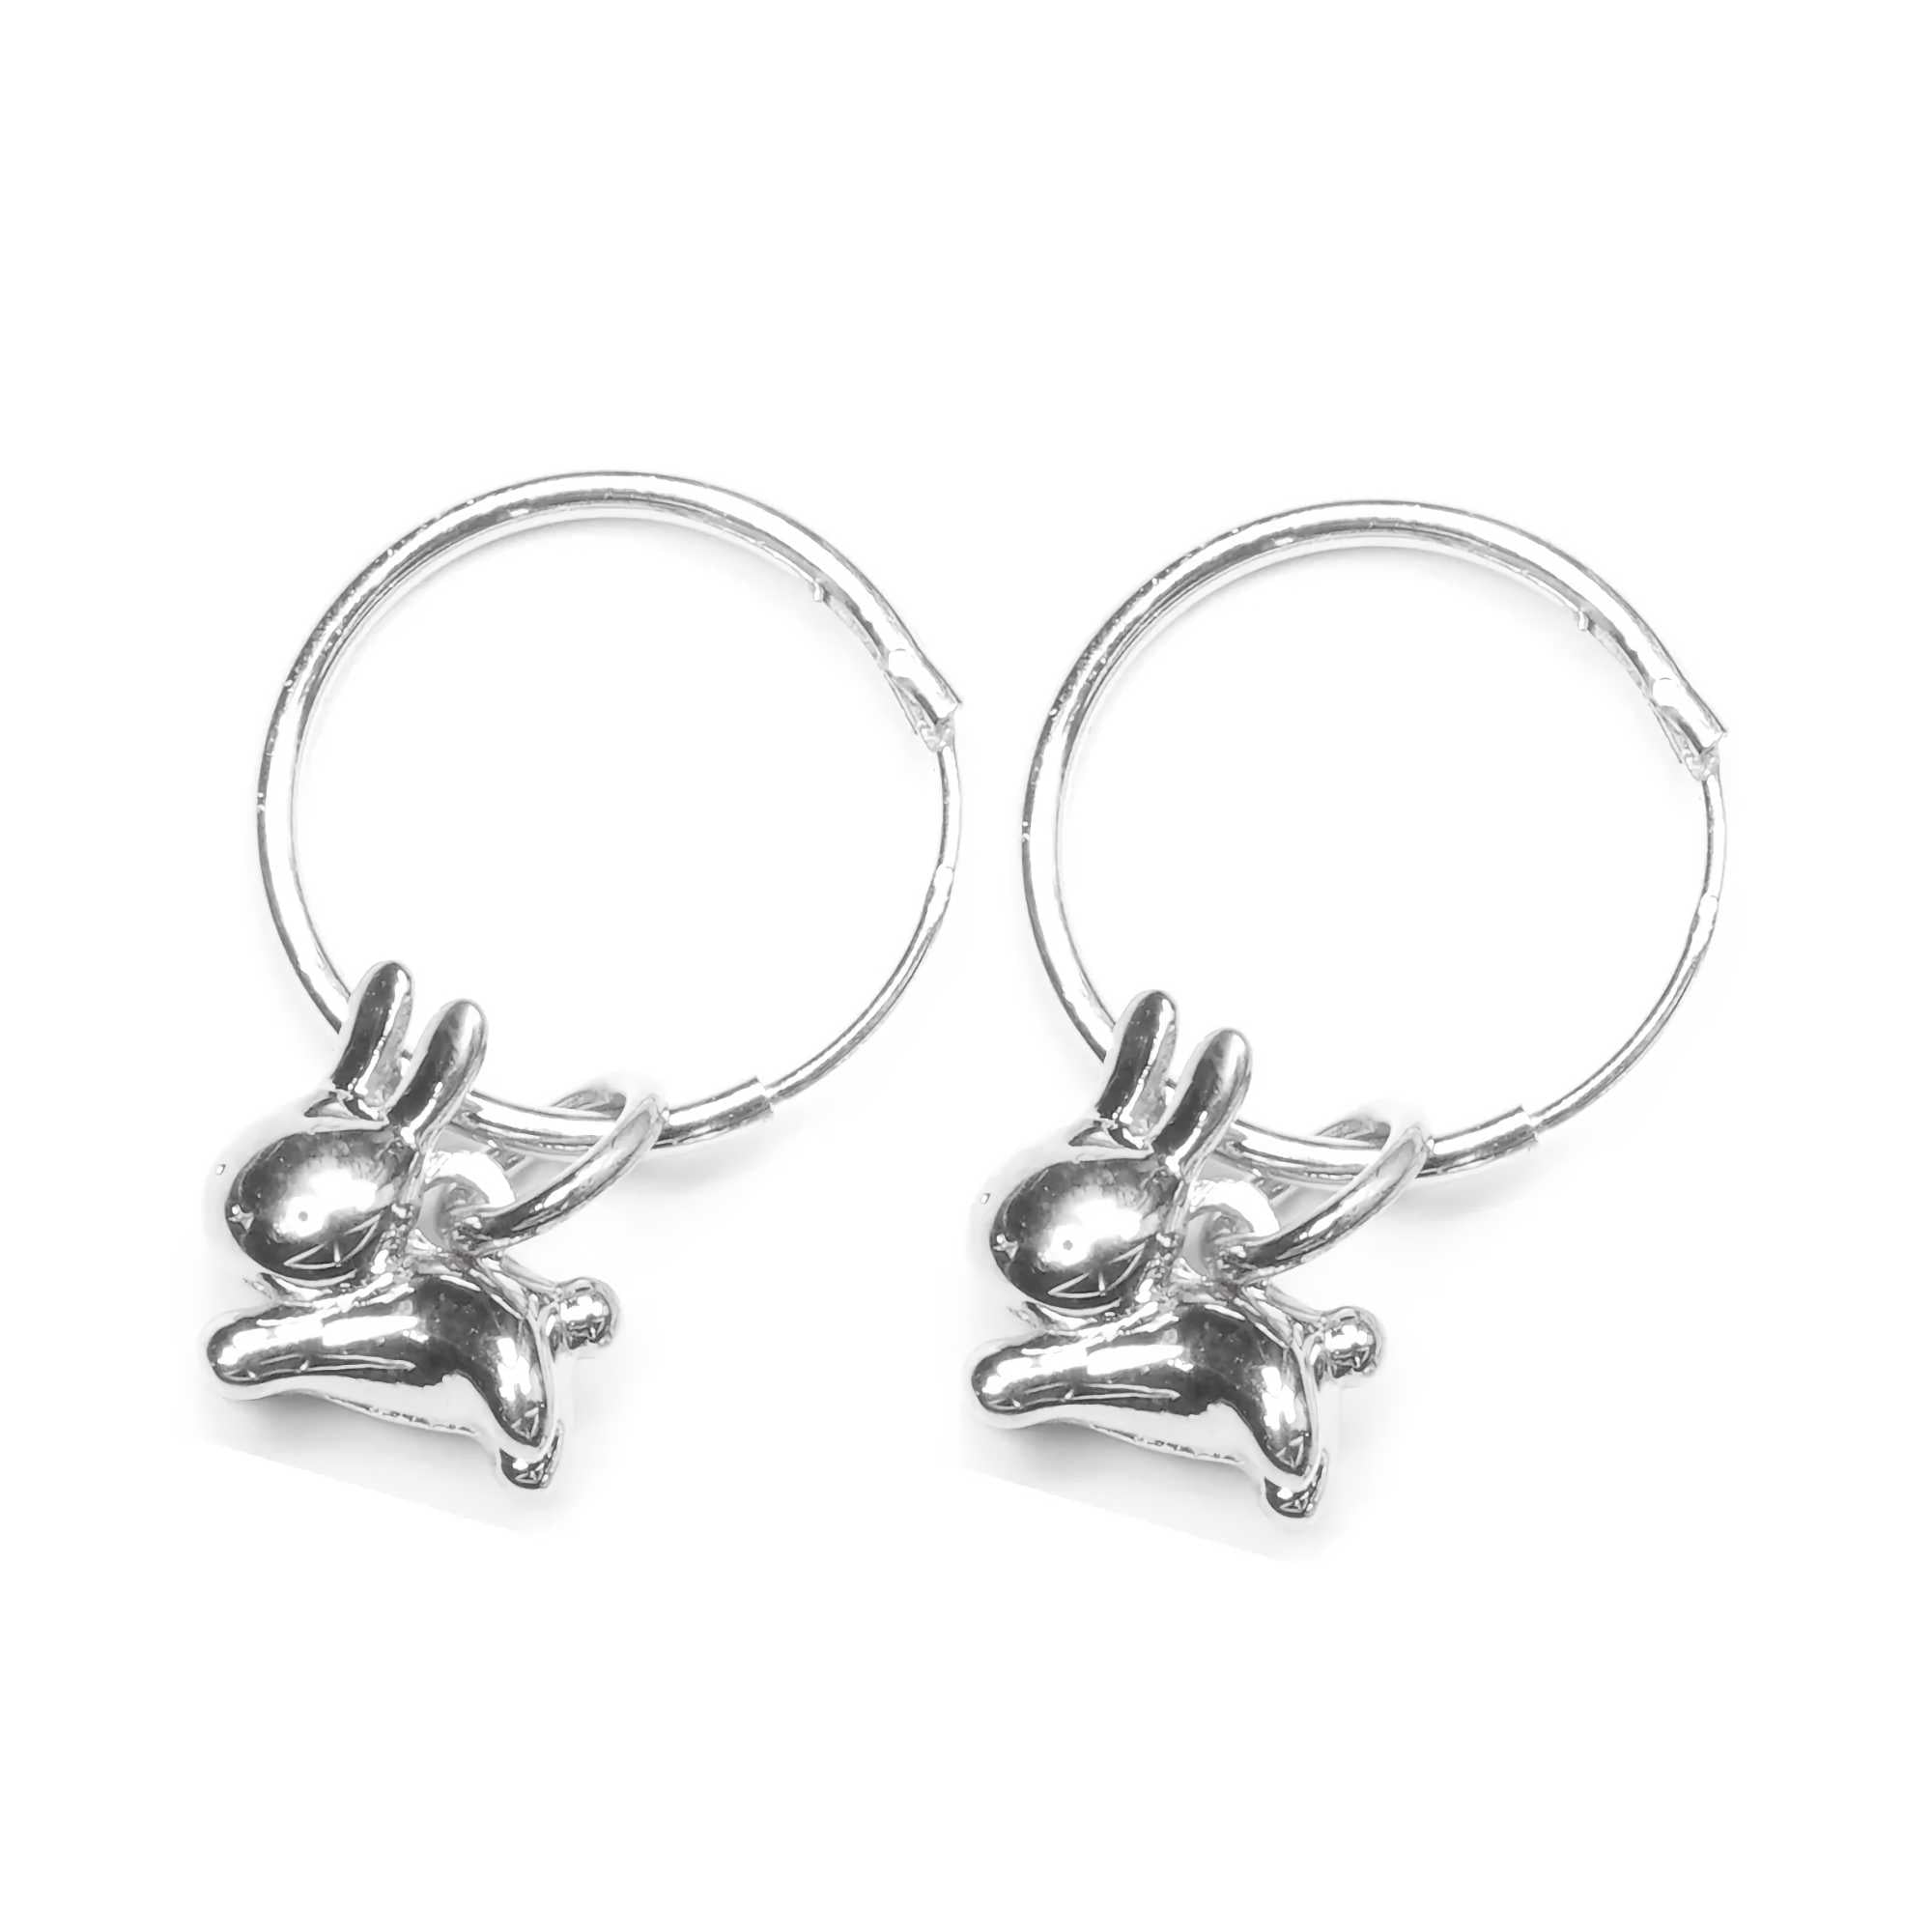 Miffy Leaping Rabbit Hoop Earrings, Sterling Silver